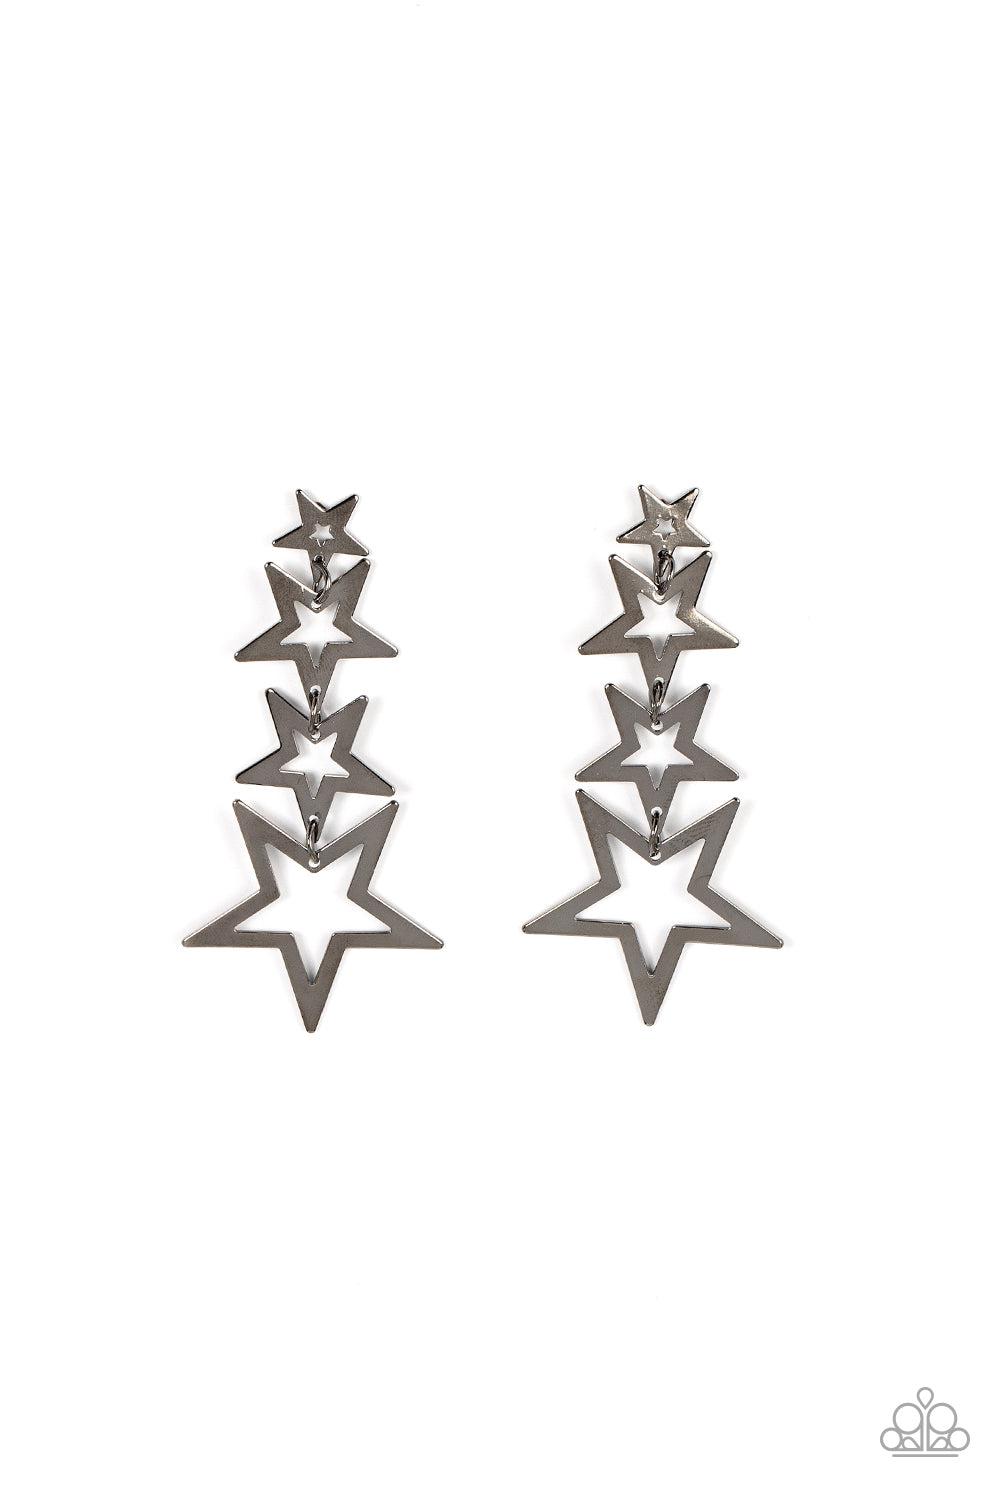 Superstar Crescendo Gunmetal Black Star Earrings - Paparazzi Accessories- lightbox - CarasShop.com - $5 Jewelry by Cara Jewels